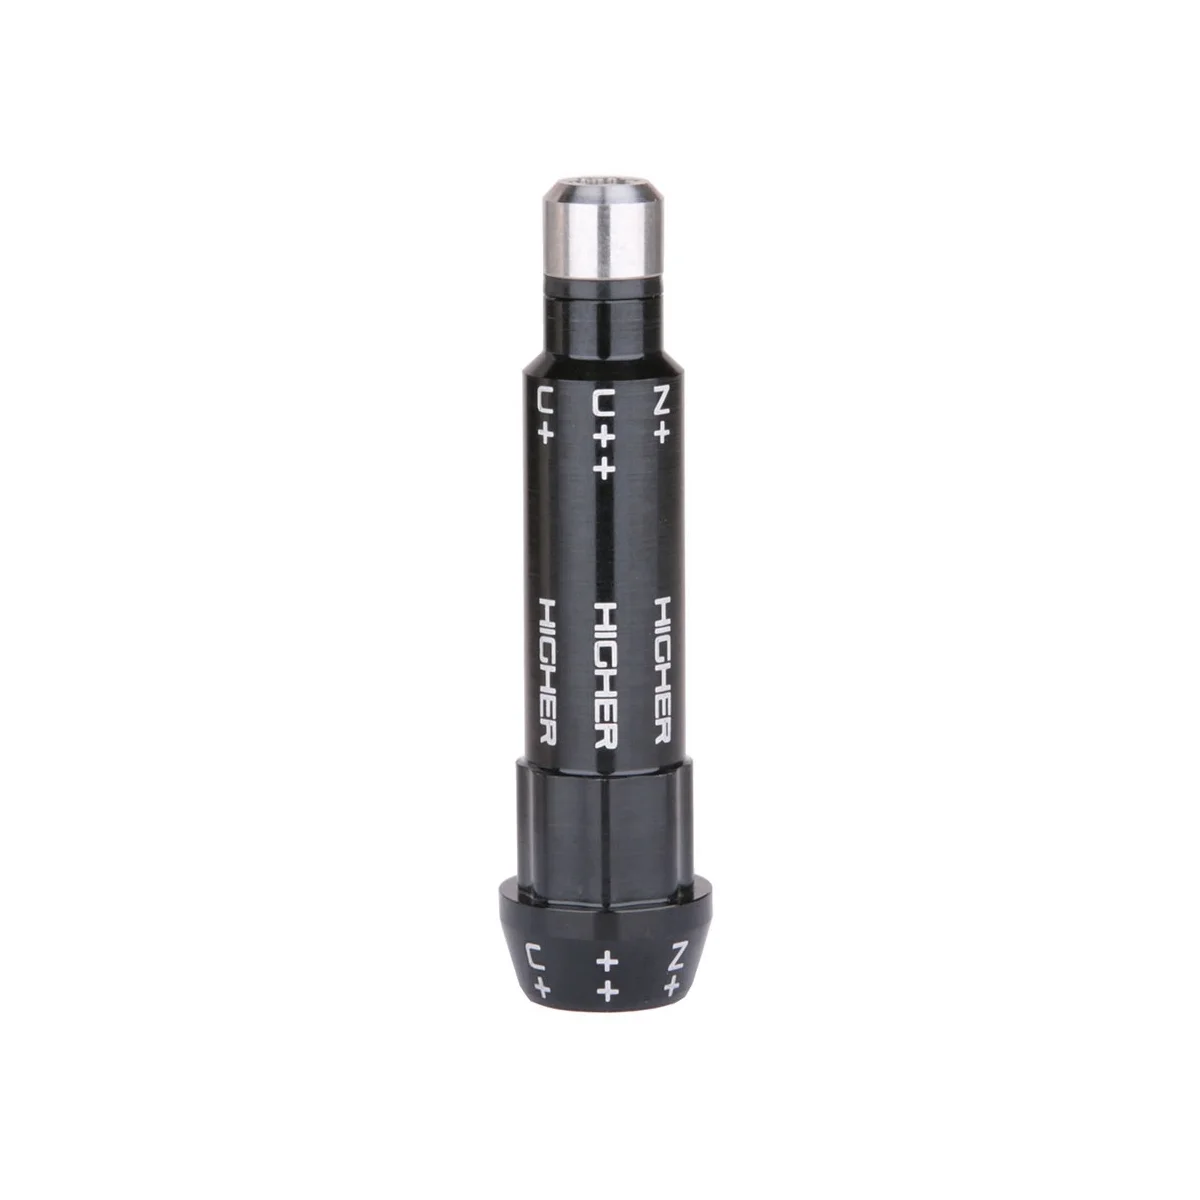 Tip Size .335 RH Golf Shaft Sleeve Adapter for Tour Edge Exo